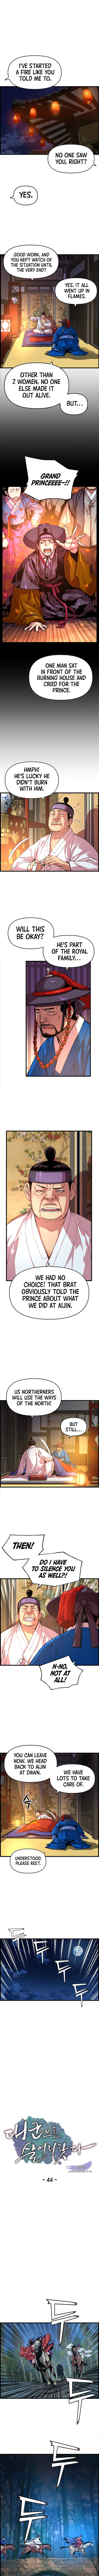 I Shall Live as a Prince - Chapter 44 Page 2